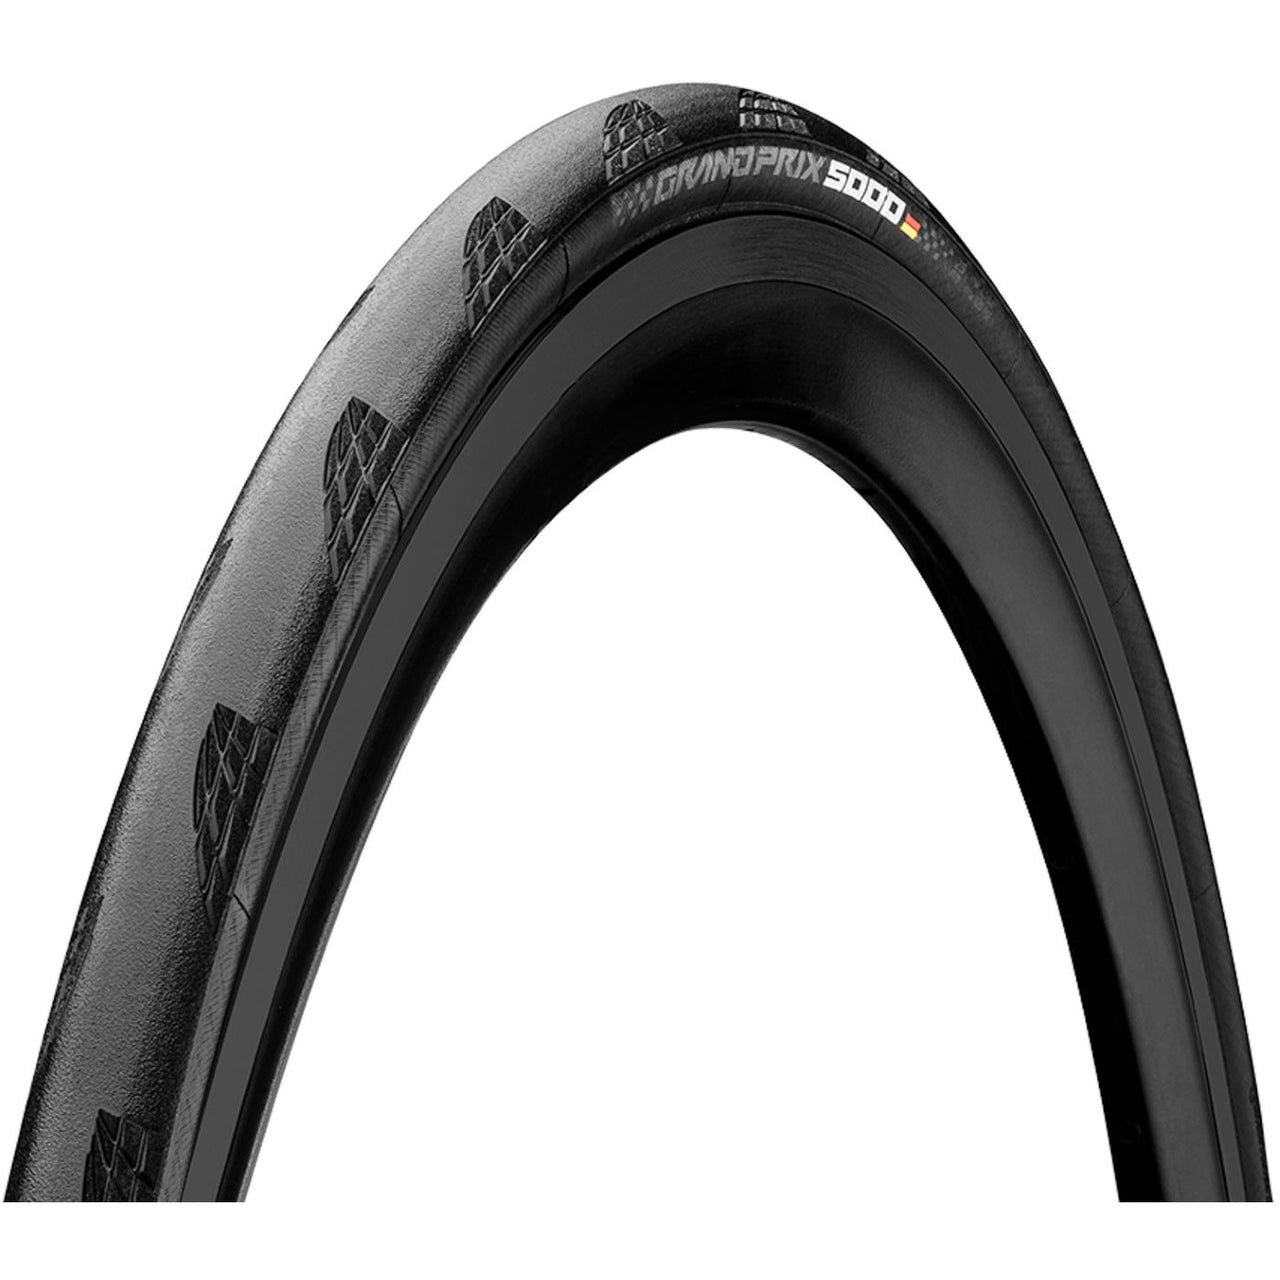 Conti R Gp5000 700x28c Folding Tyre